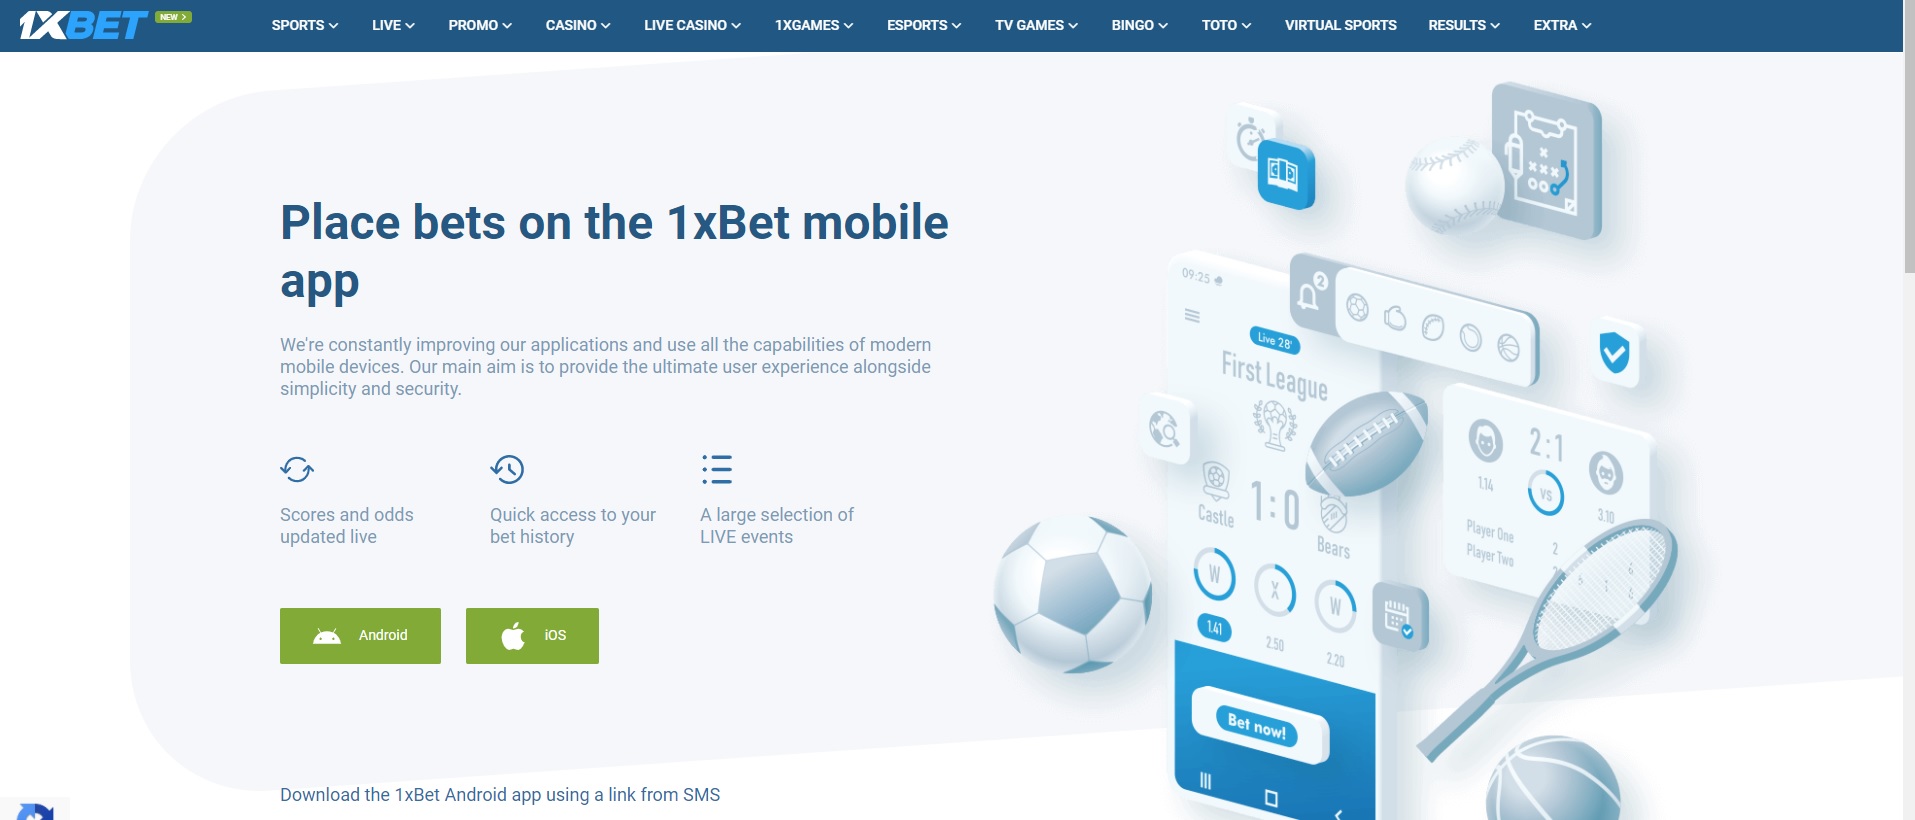 1xBet App: Features of 1xBet Online Sports Betting App